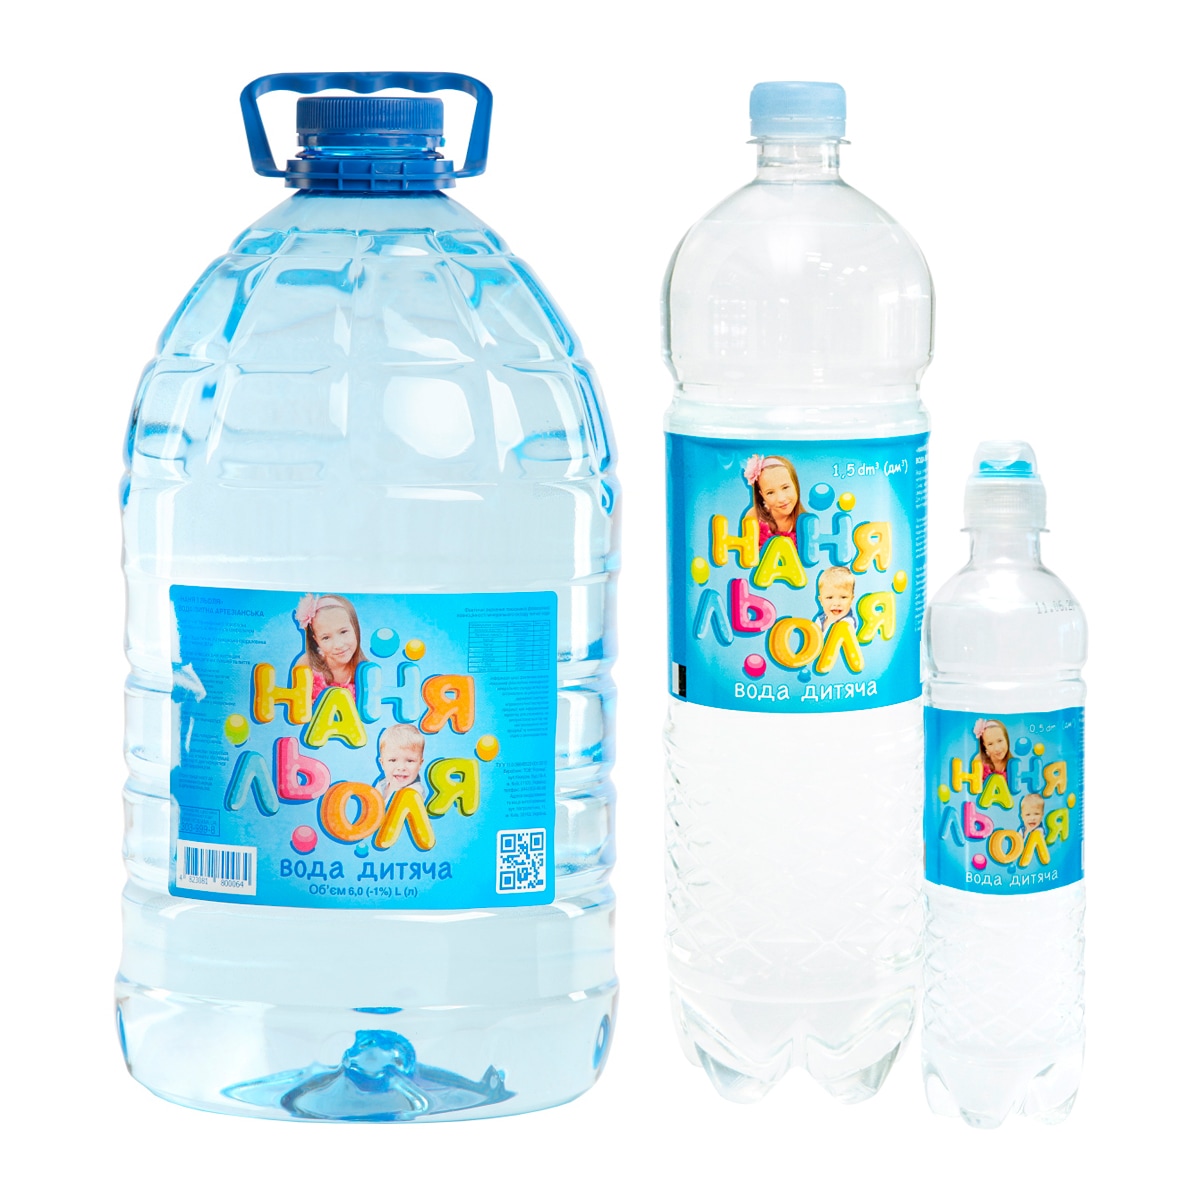 Дитяча питна вода Наня і Льоля™ - доставка воды - rosiana.ua - 380-44-303-999-3